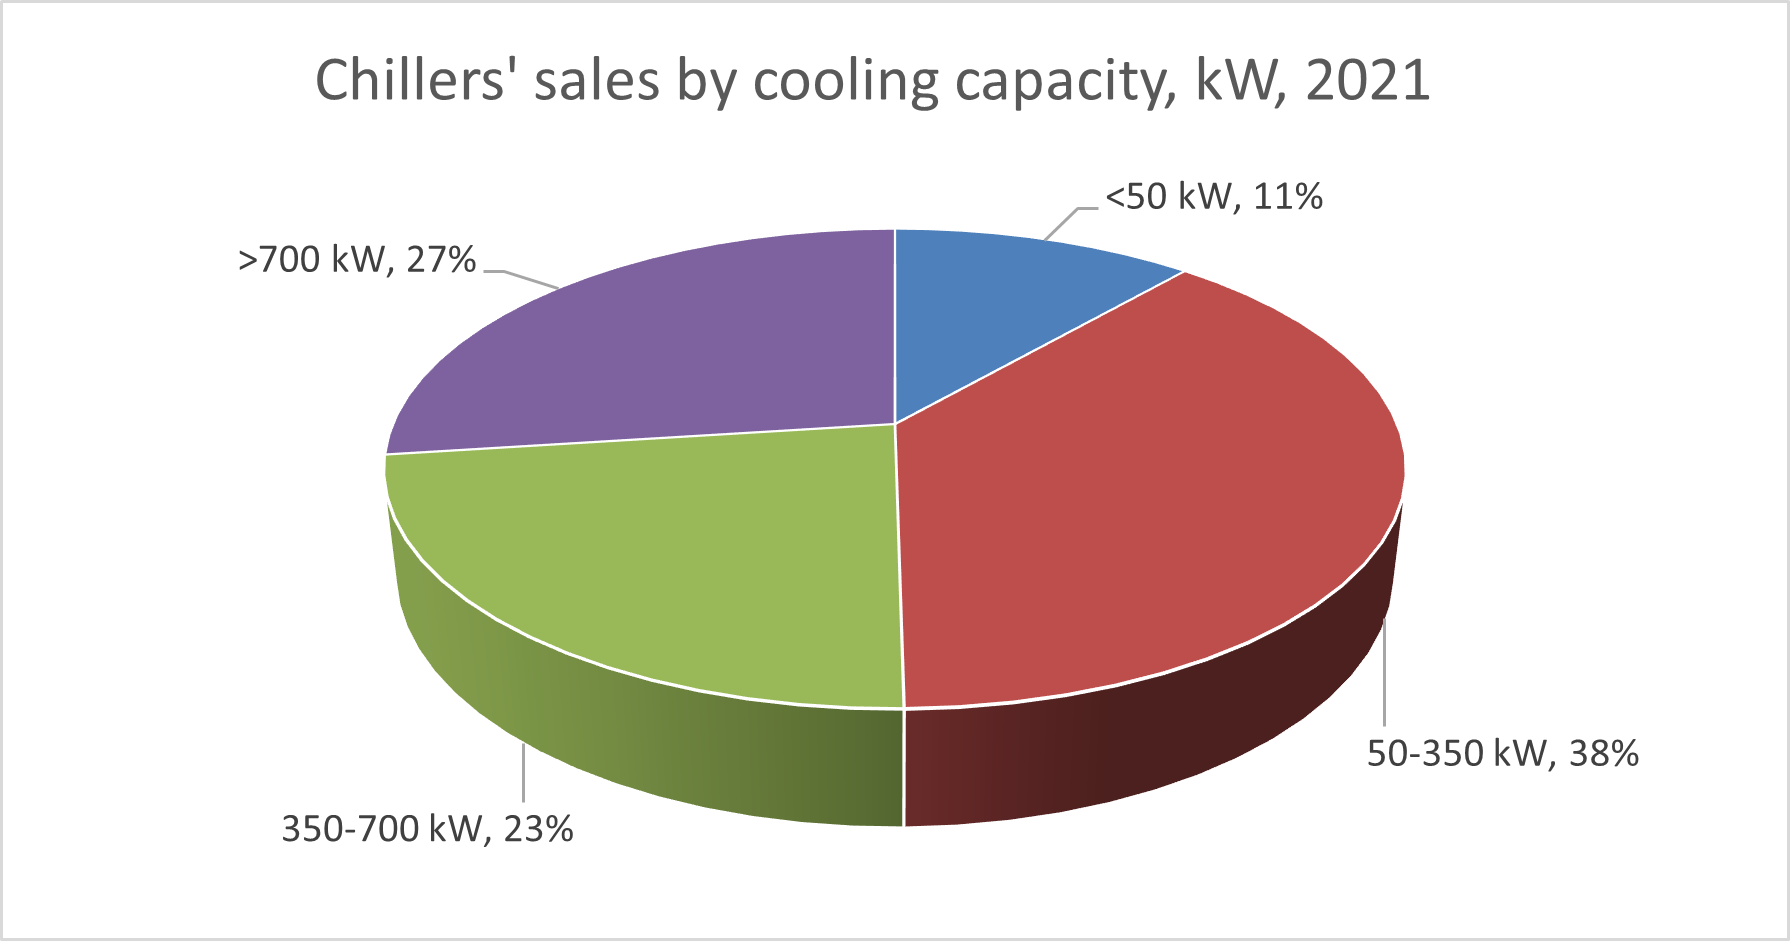 Vendite di refrigeratori per capacità di raffreddamento (percentuale in kW), UE 28 - 2021, da Eurovent Market intelligence